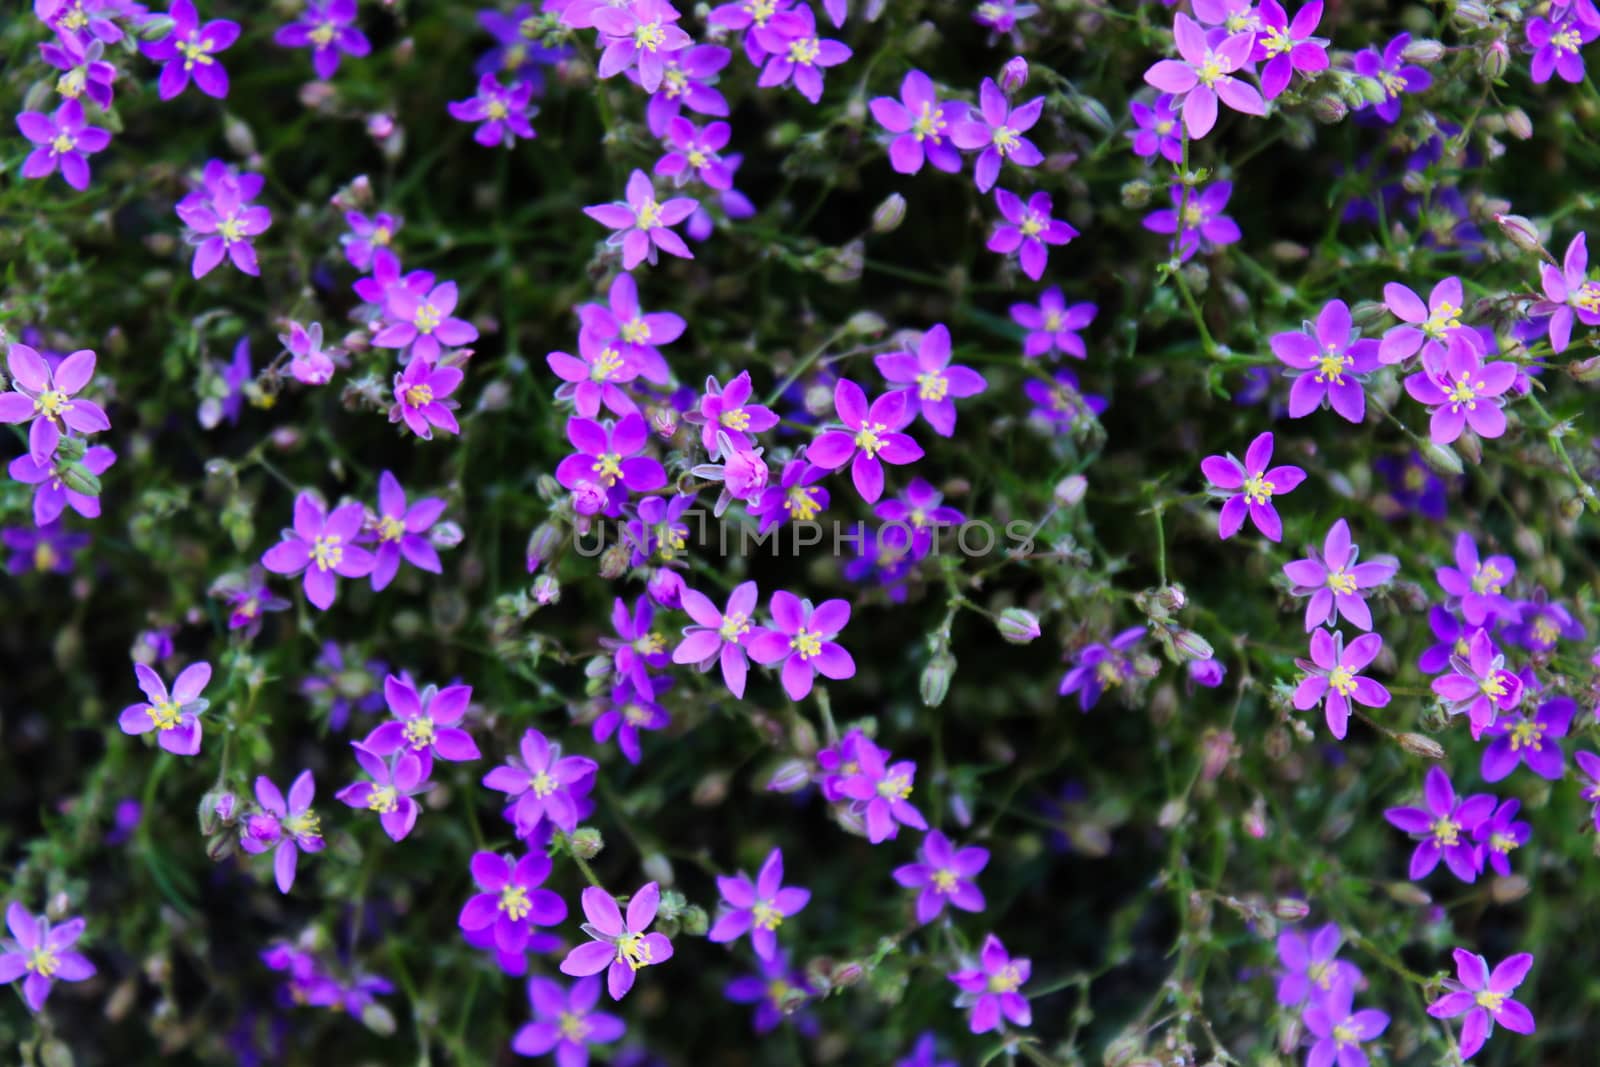 Very small invasive purple flowers in Beja, Portugal.